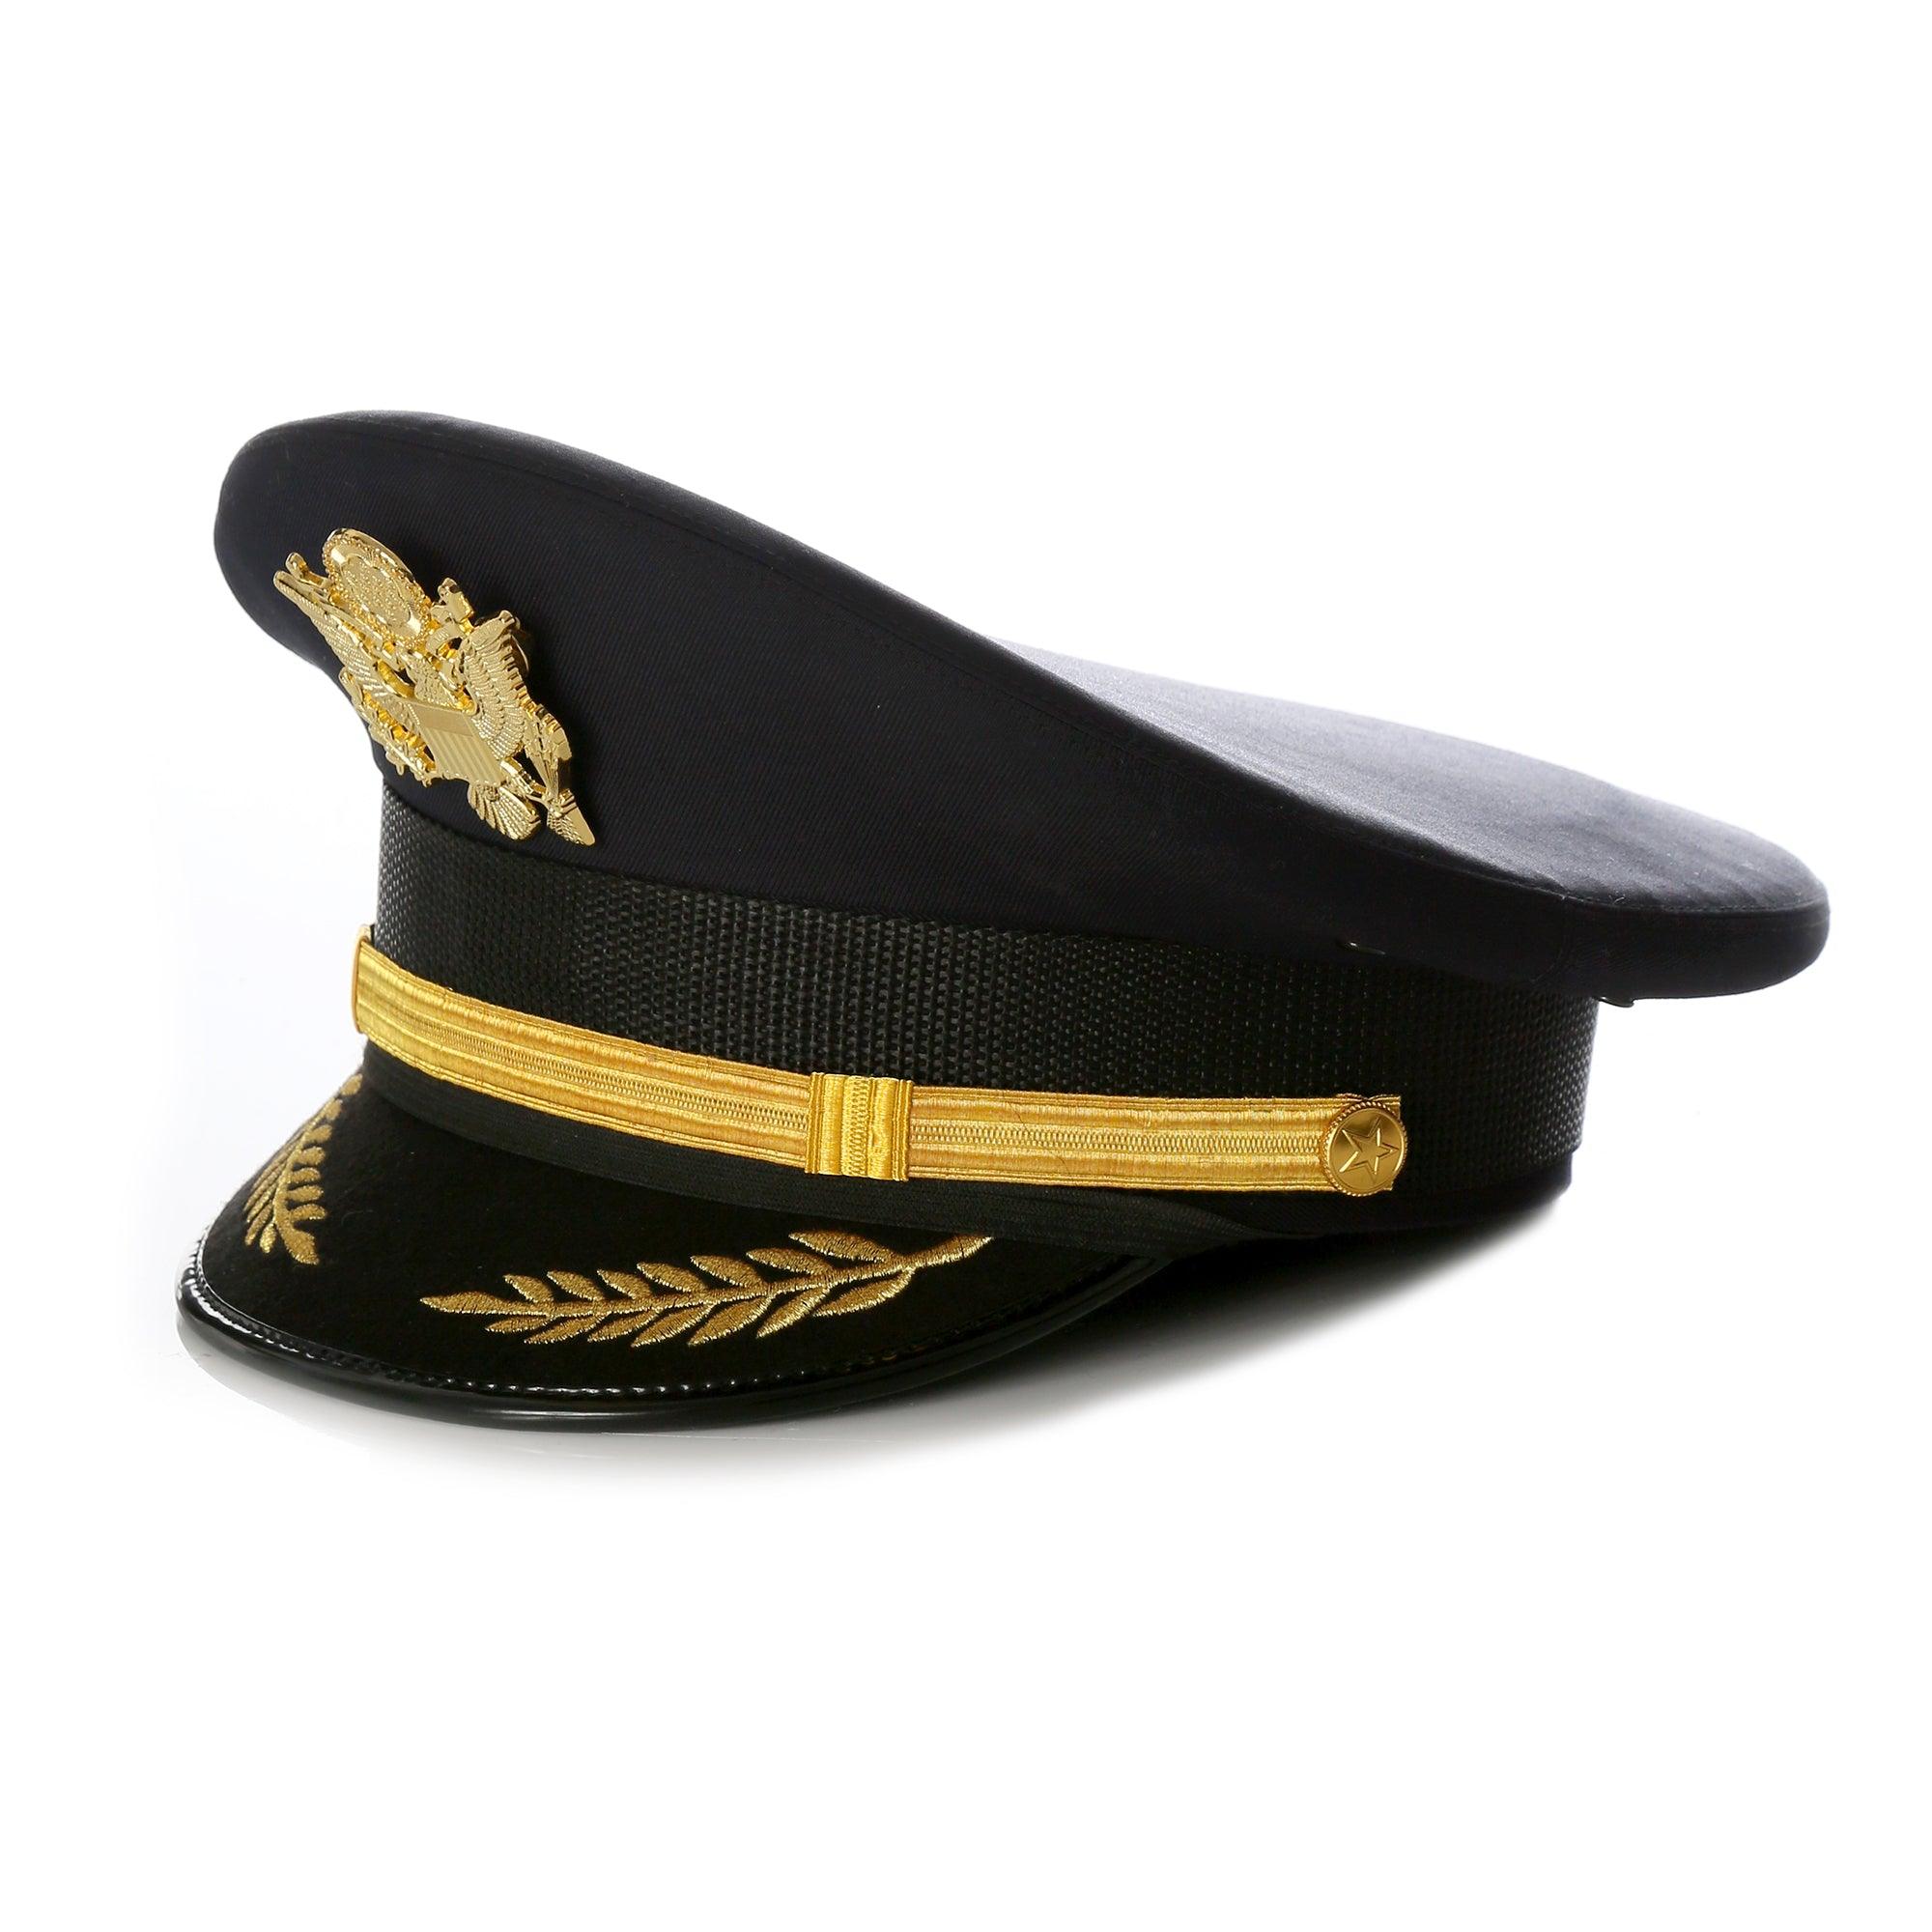 Ferrecci Black Military Cadet Captain Sailor Hat Small